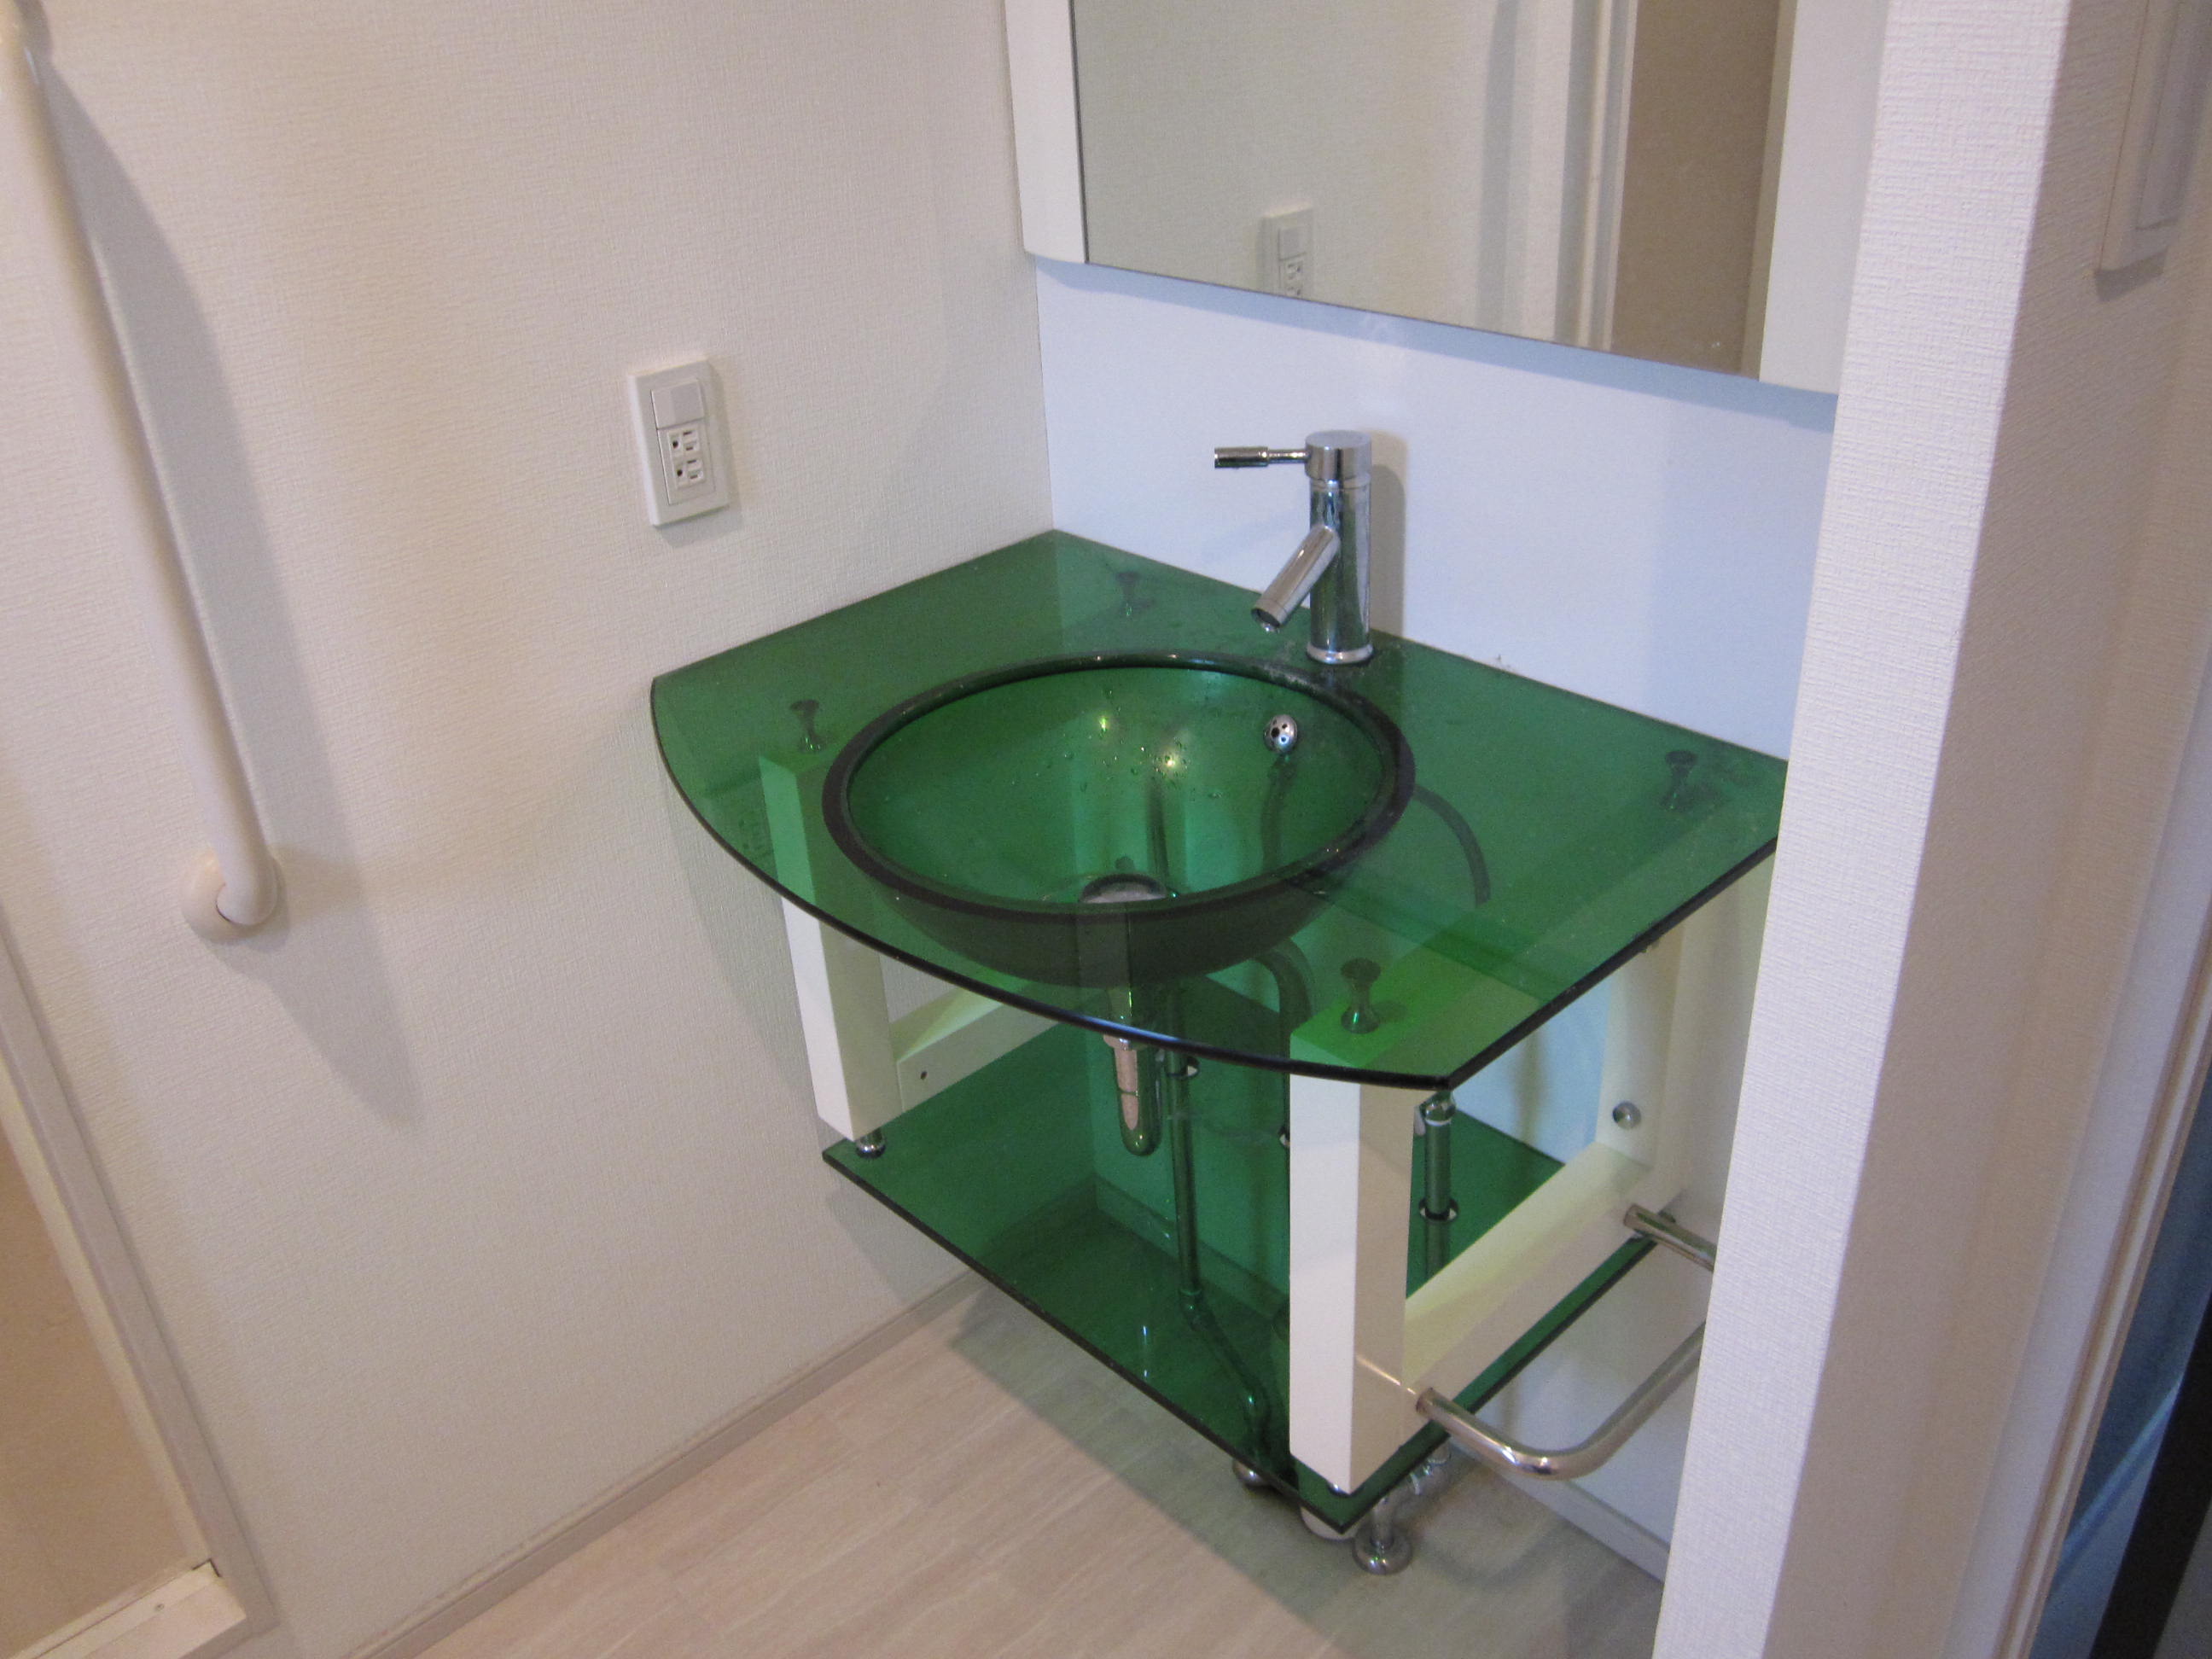 Washroom. Stylish glass basin